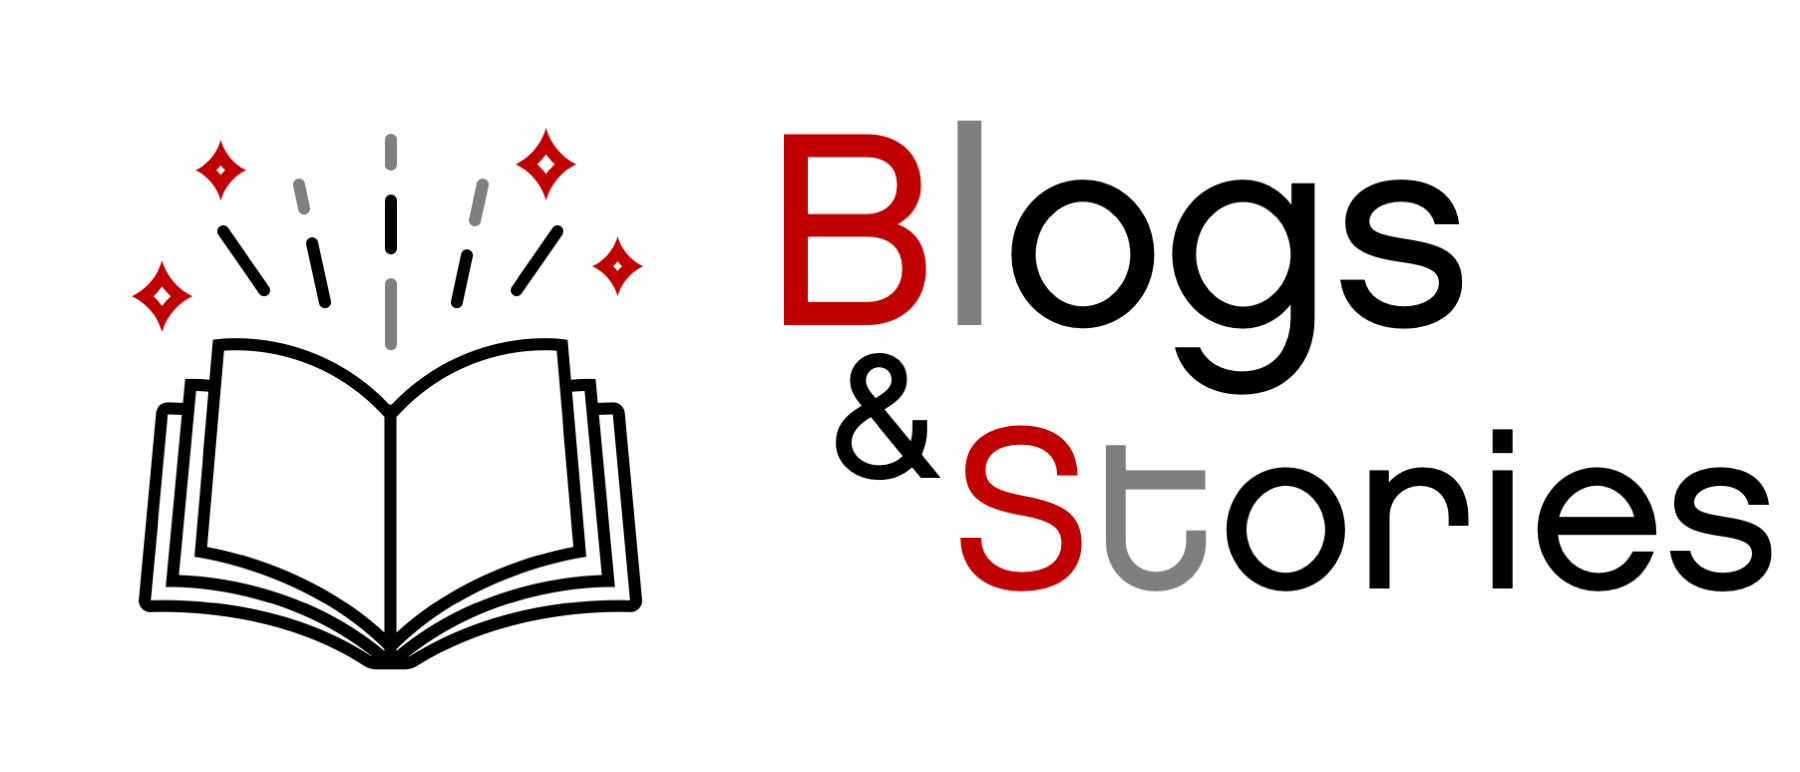 Blogs & Stories